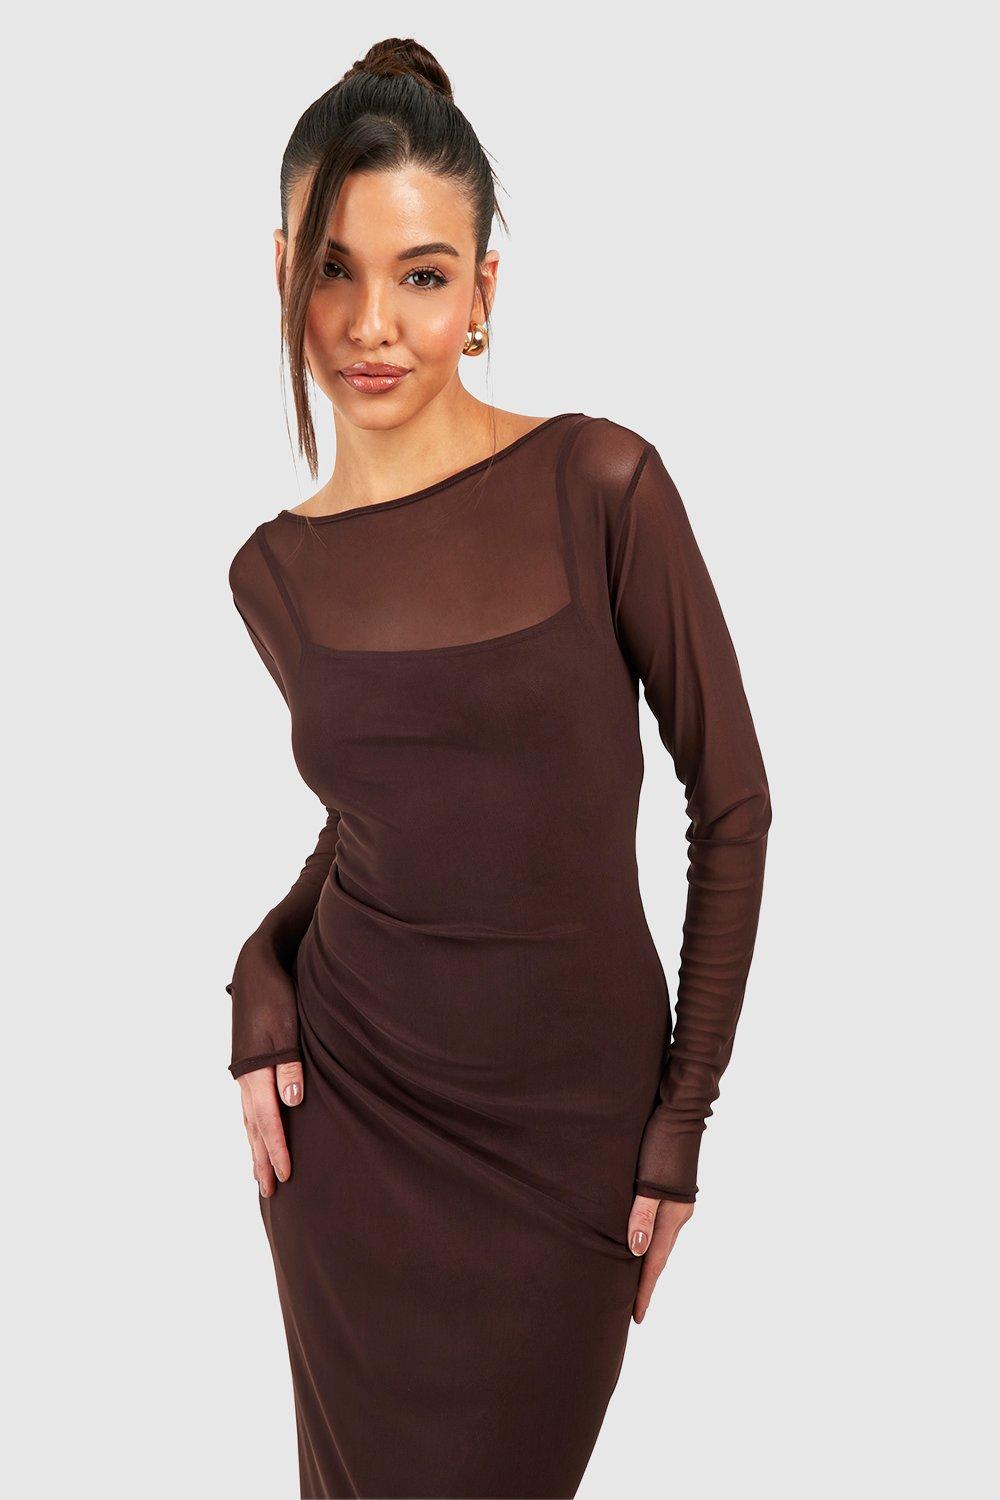 https://media.boohoo.com/i/boohoo/gzz75639_brown_xl_2/female-brown-sheer-mesh-contrast-midaxi-dress